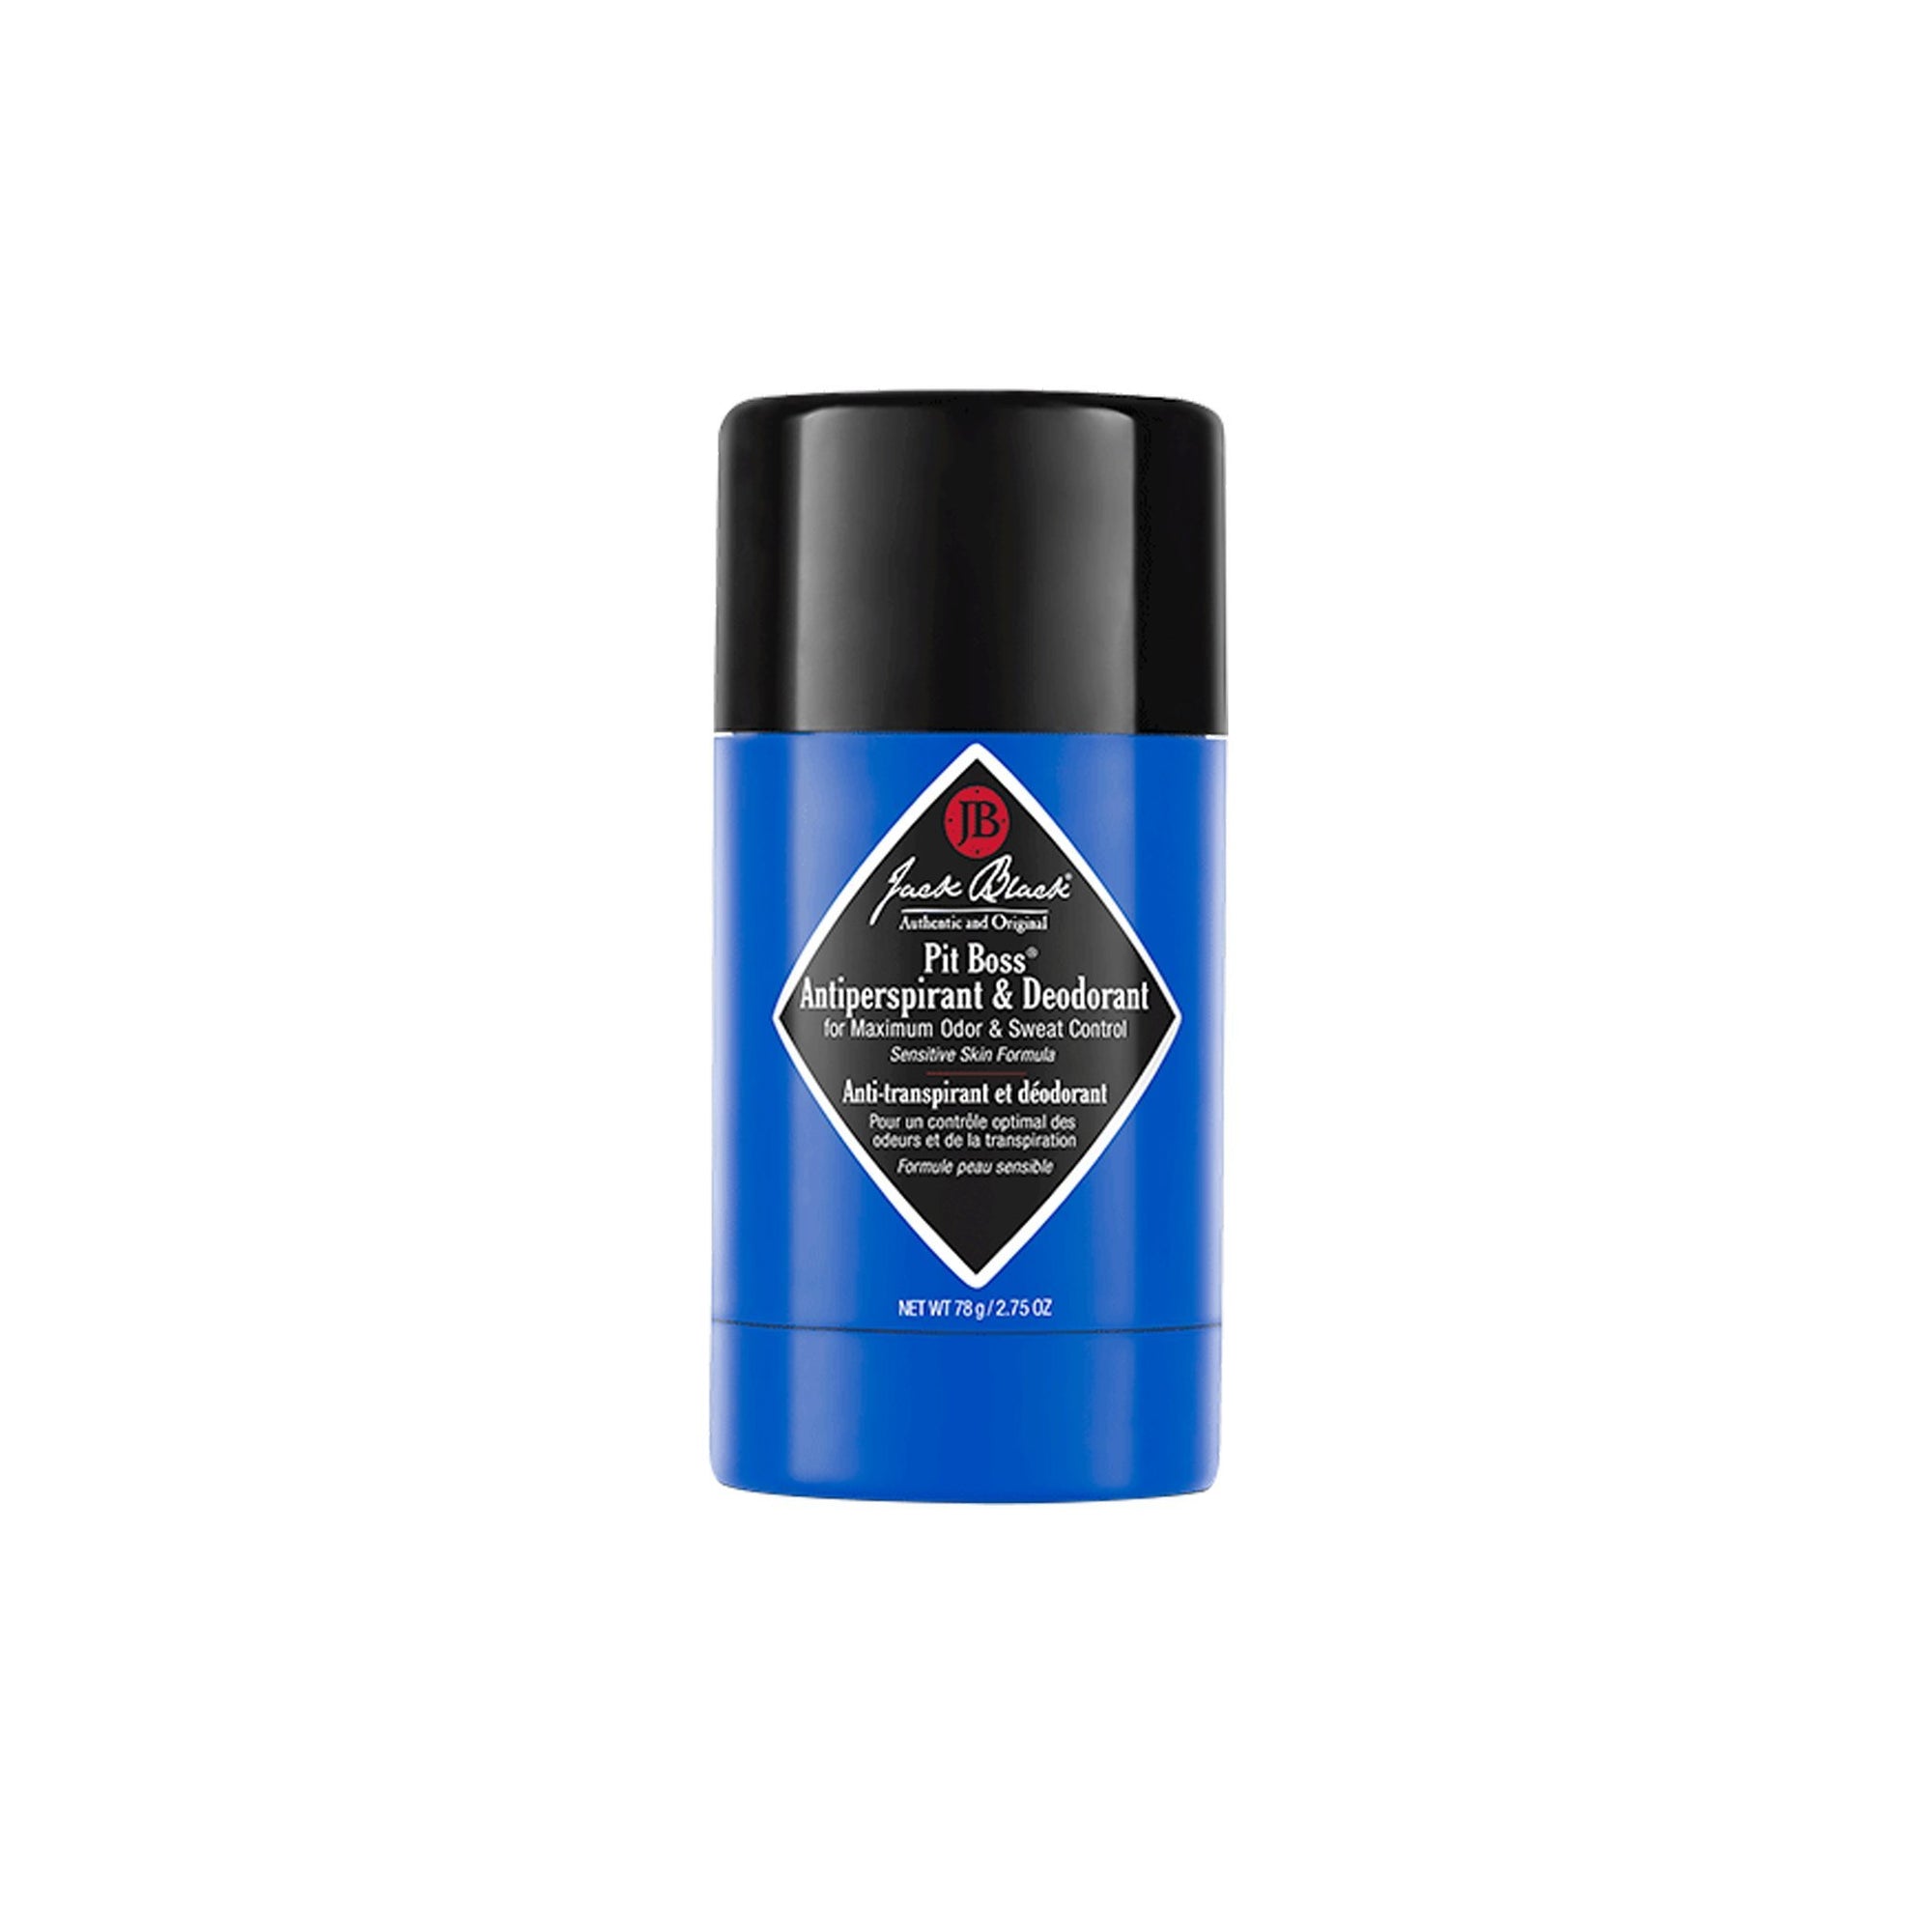 Jack Black Pit Boss Antiperspirant & Deodorant 81ml